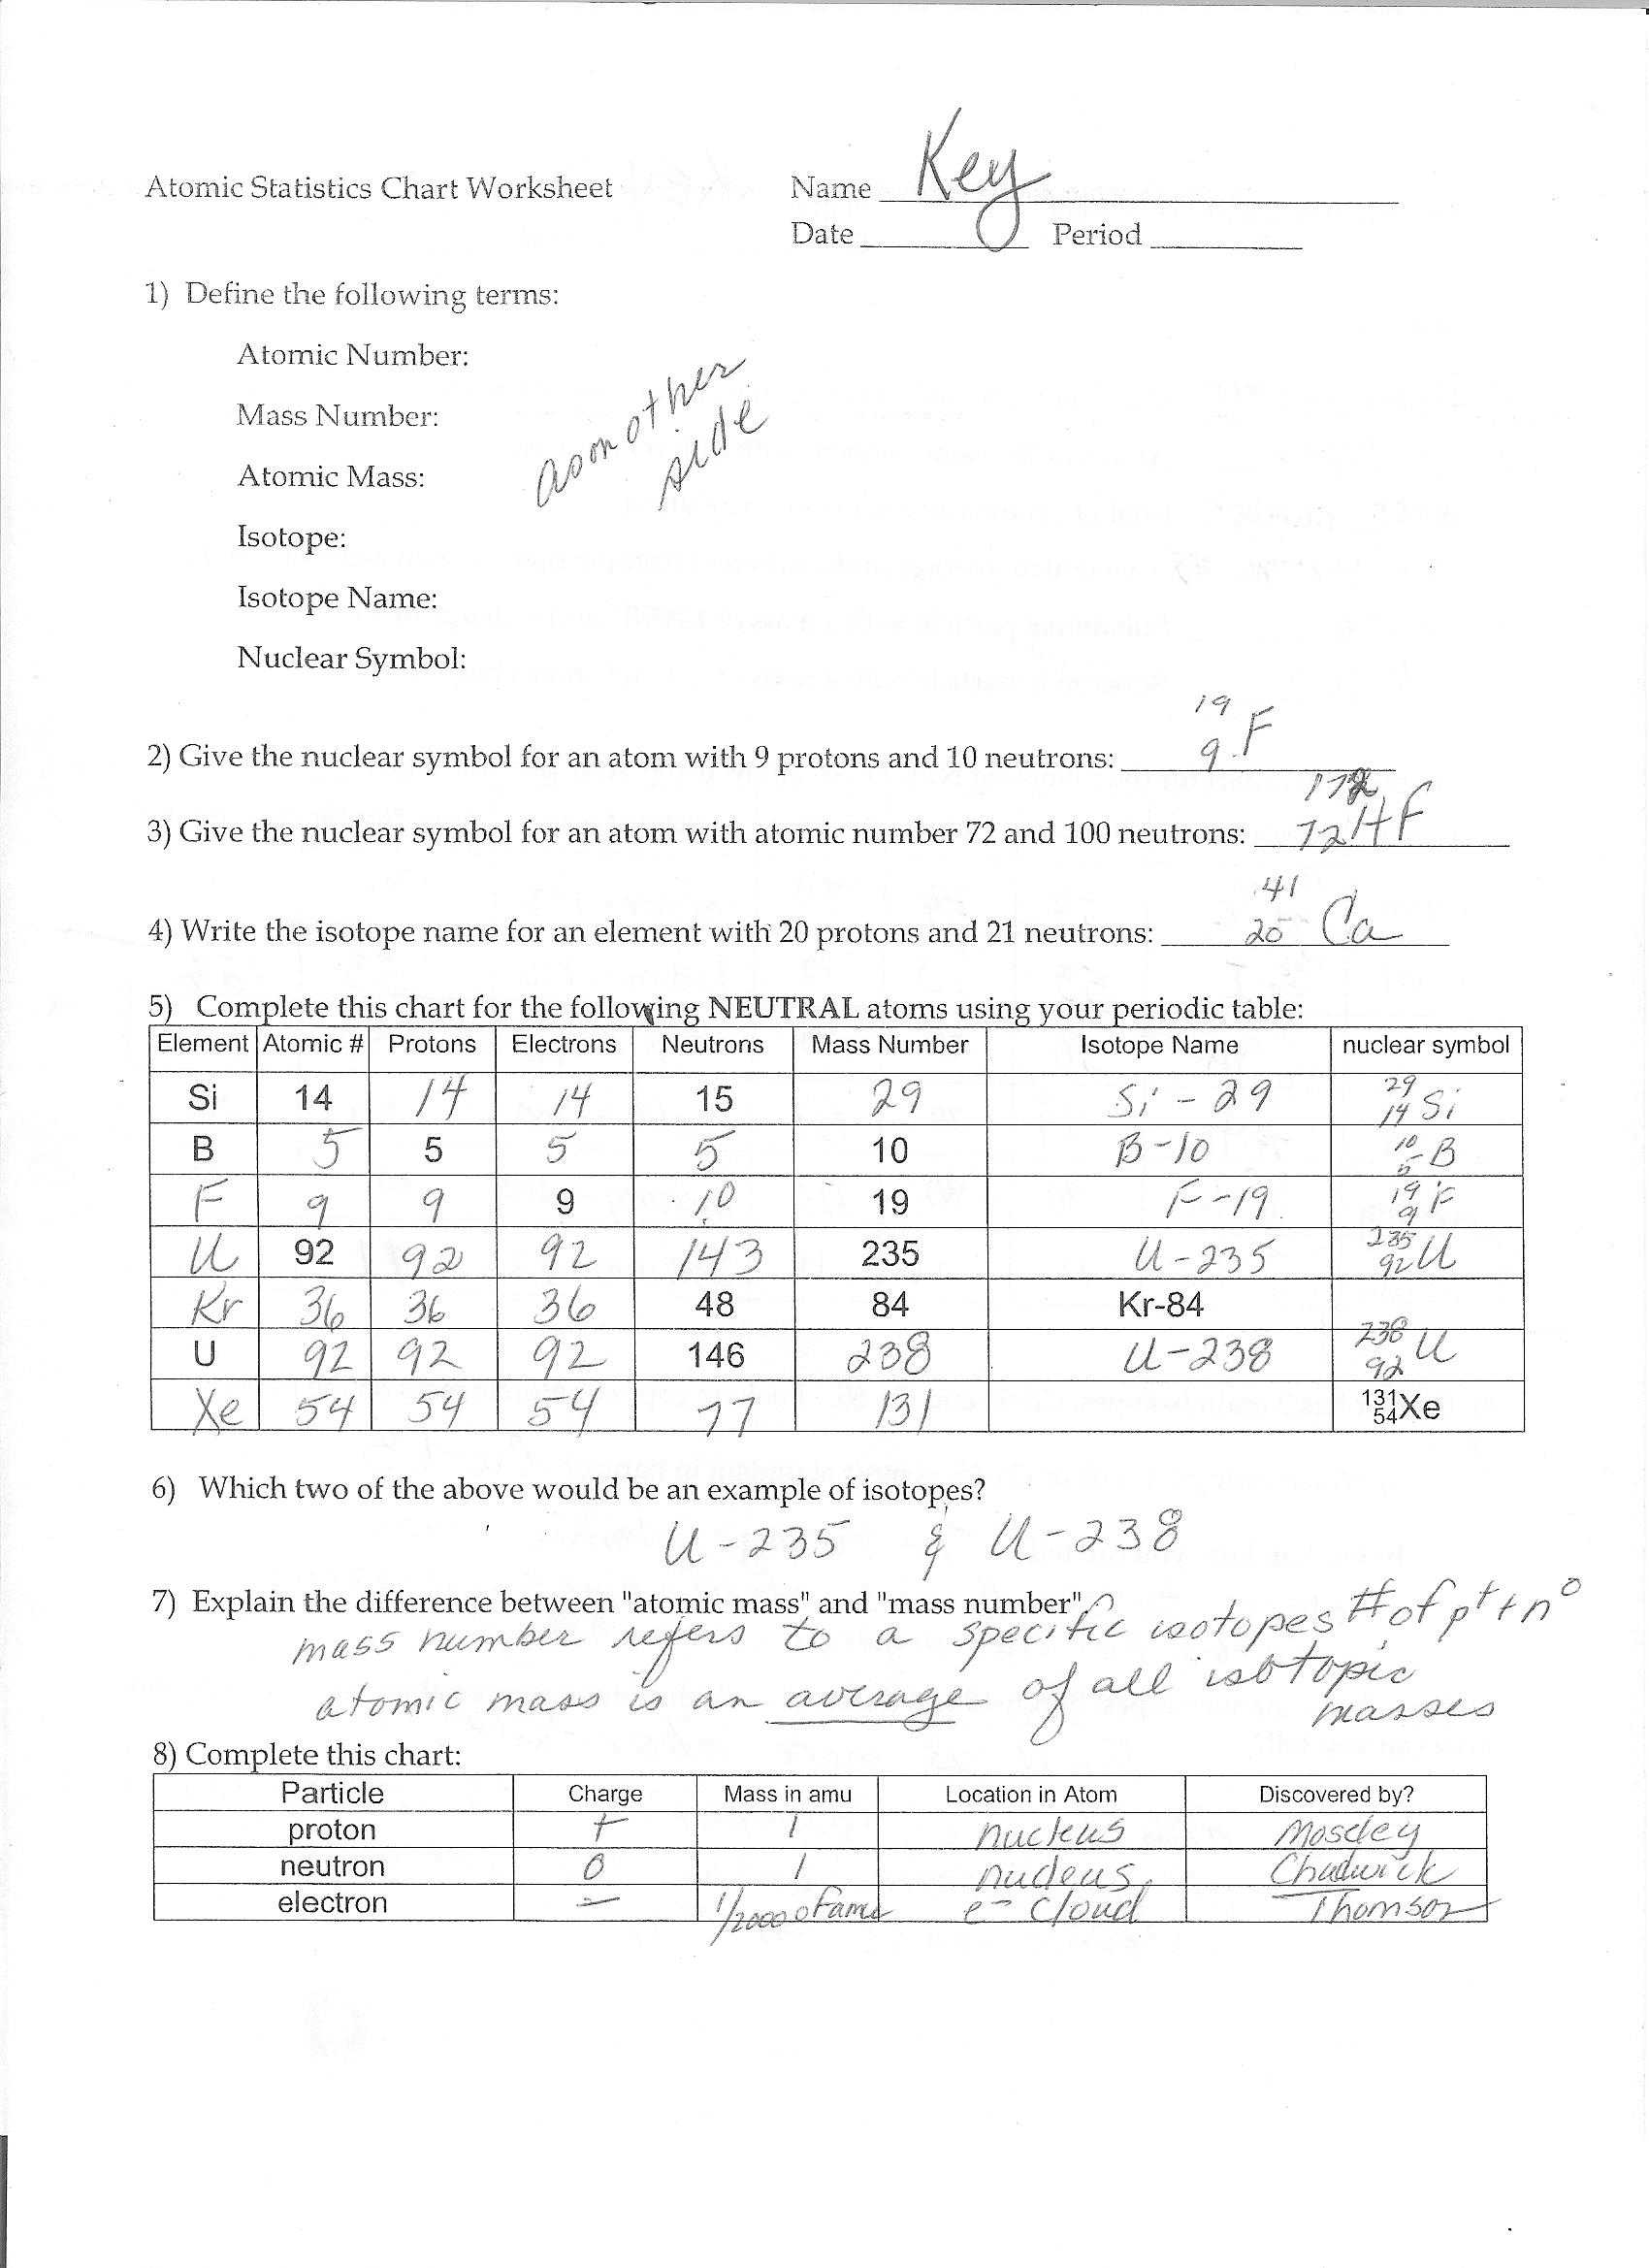 Writing Ionic formulas Worksheet Answers Also Electron Configuration Periodic Trend Worksheet Answer Key Kidz